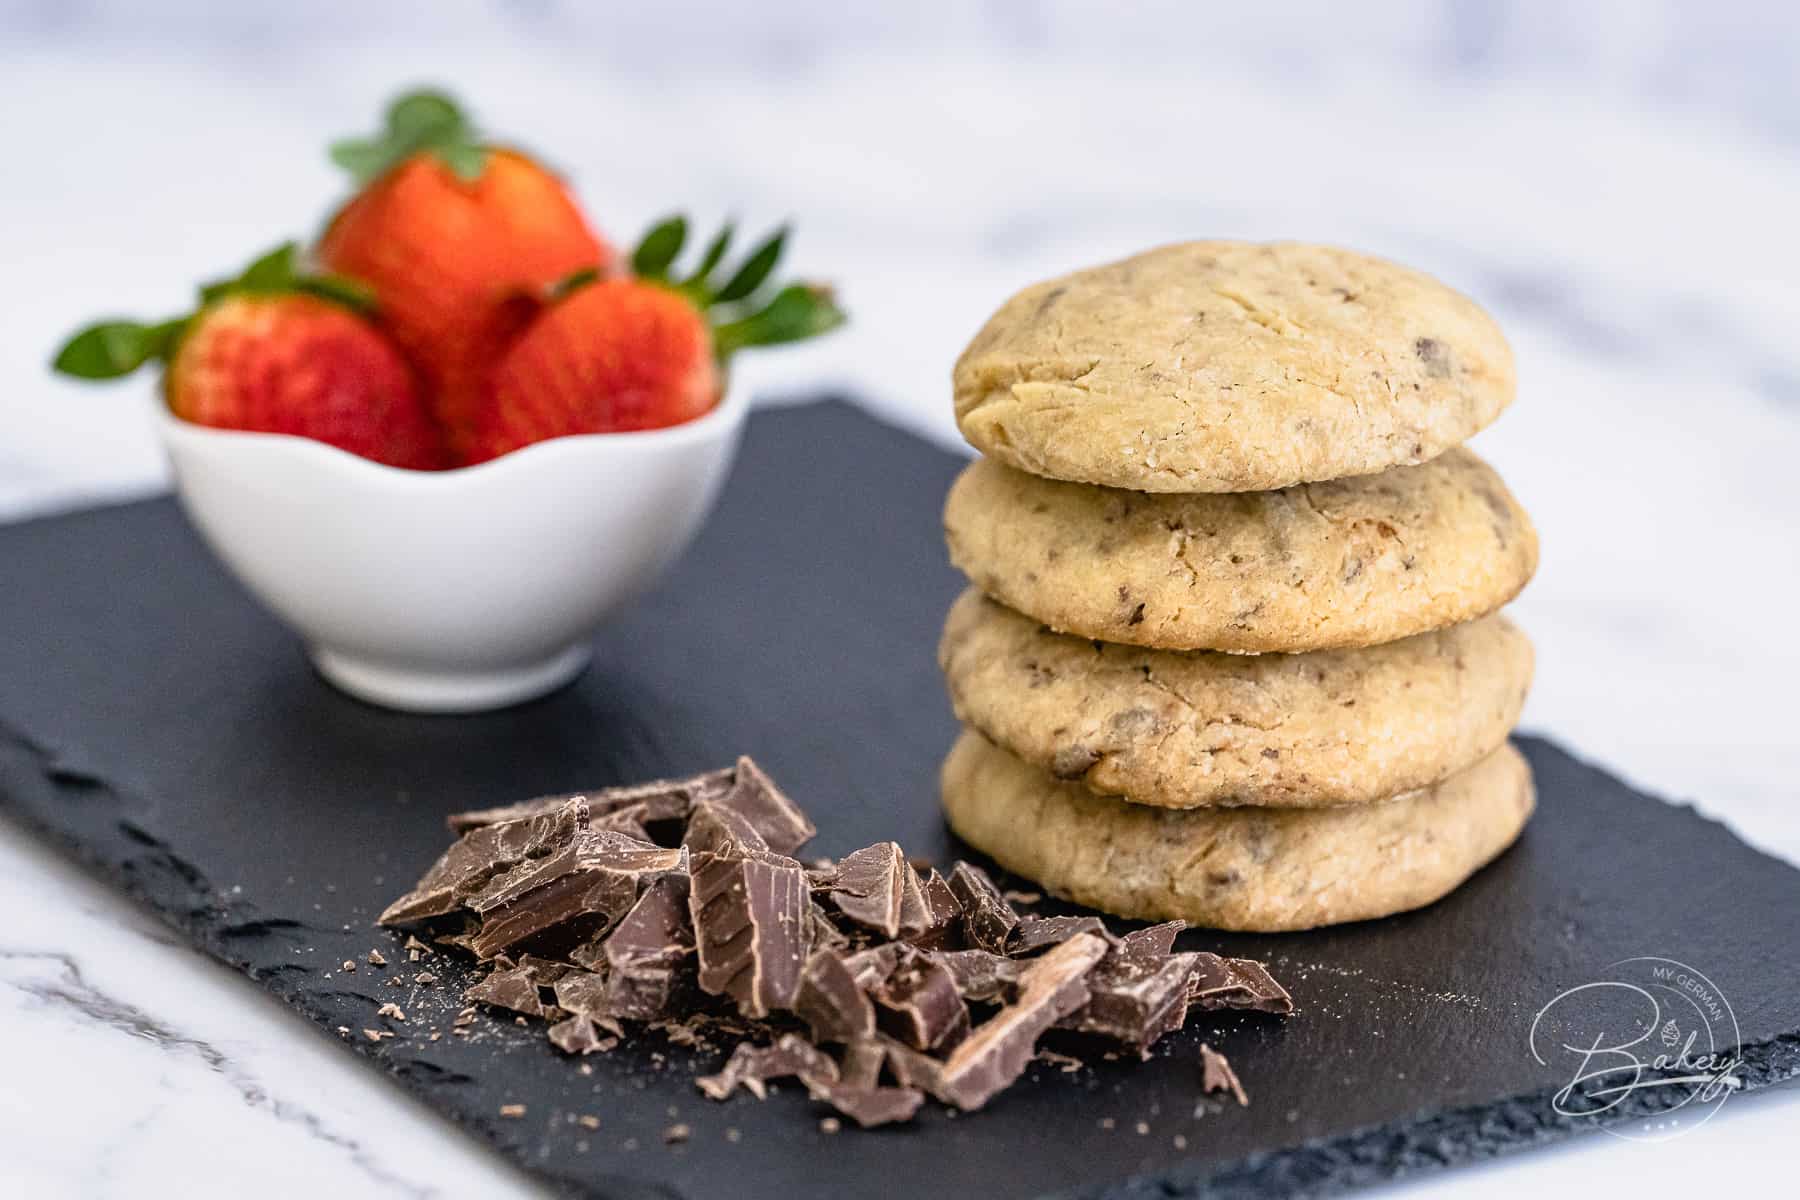 Bestes Chocolate Chunk Cookies Rezept -Leckere Schokoladen Kekse - beste Chocolate Chunk Cookies - Kekse mit Schokostückchen - Sckoko-Kekse